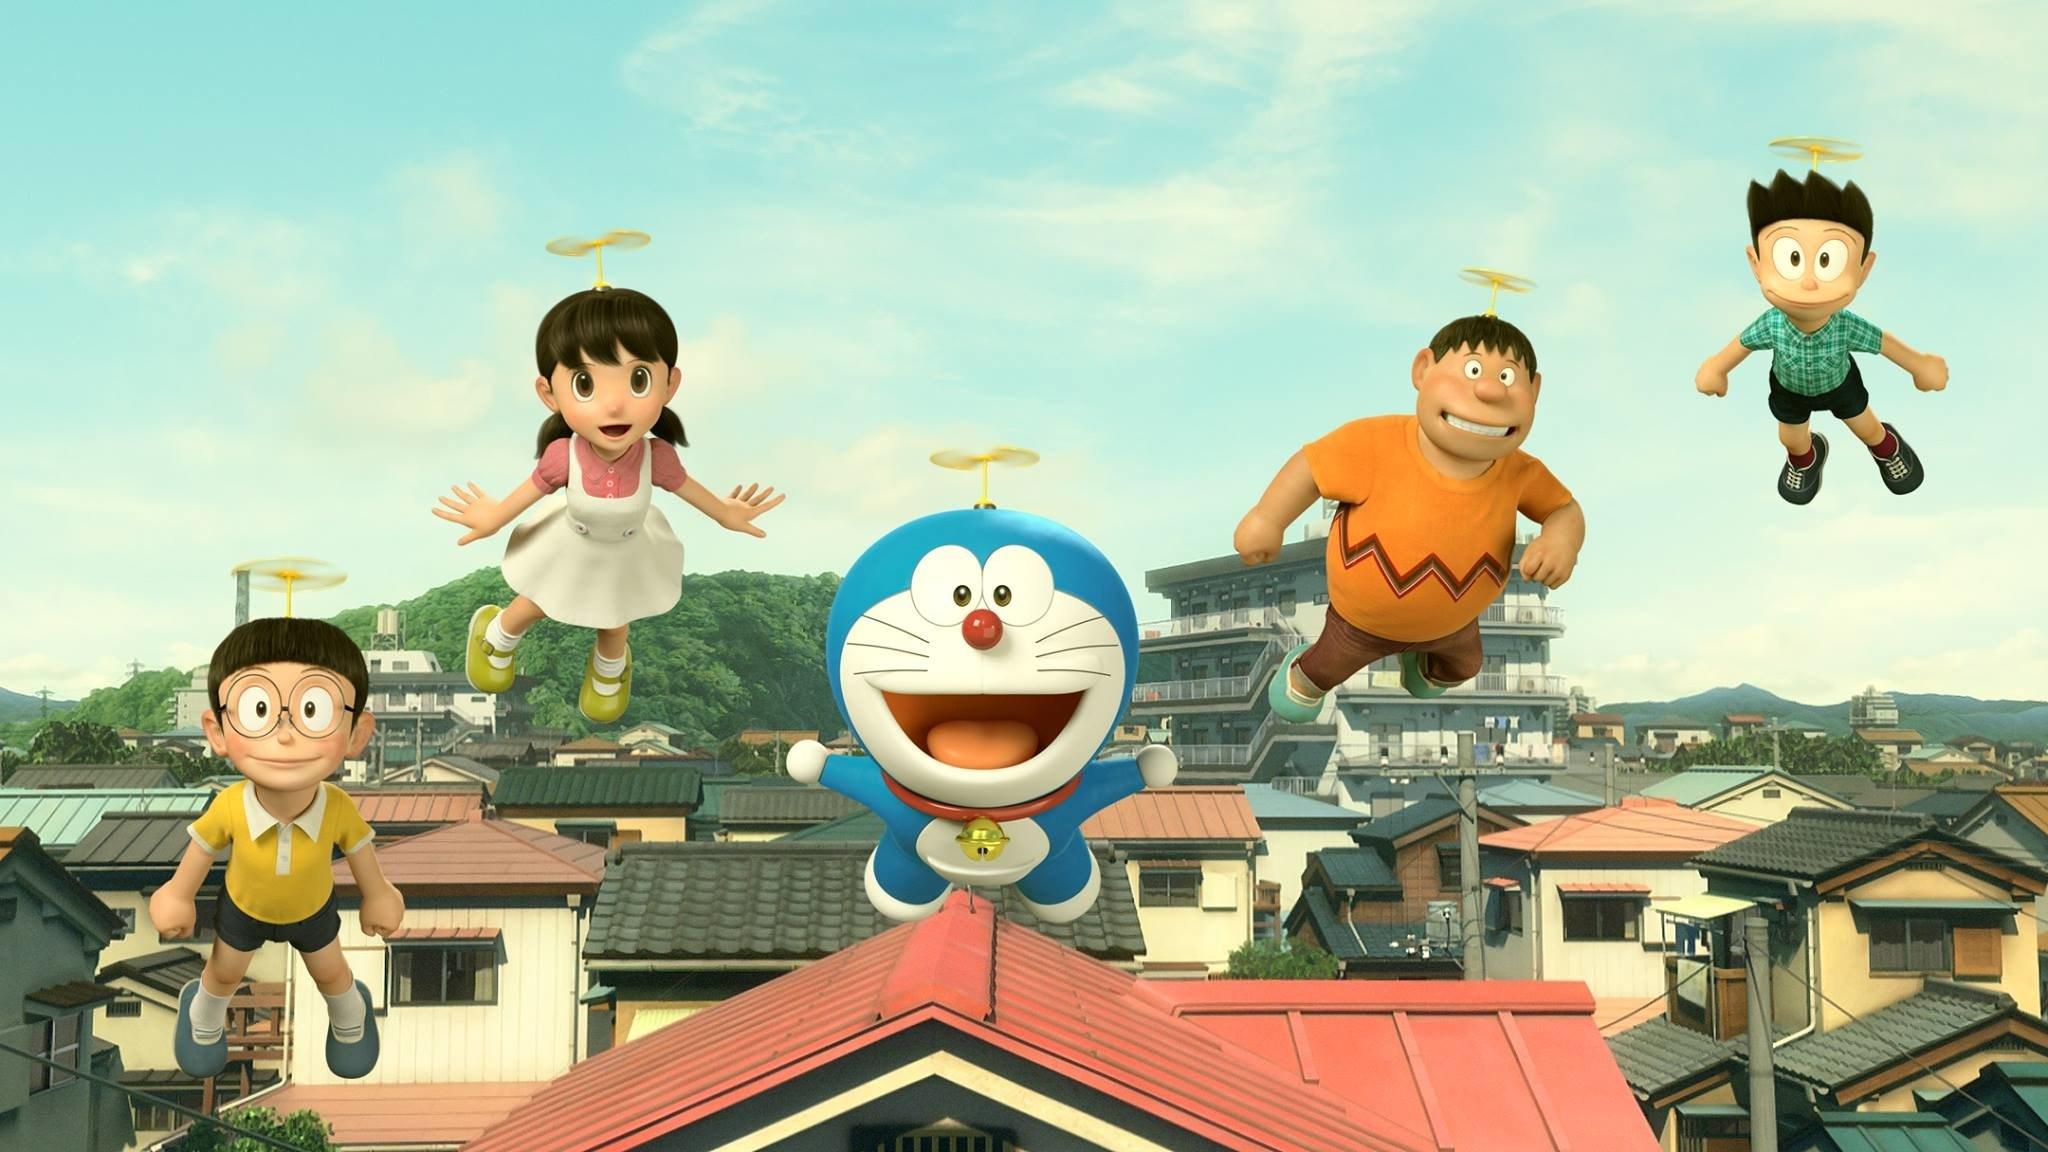 Doraemon 3D Wallpaper 2018 69 Image The Movie Stand